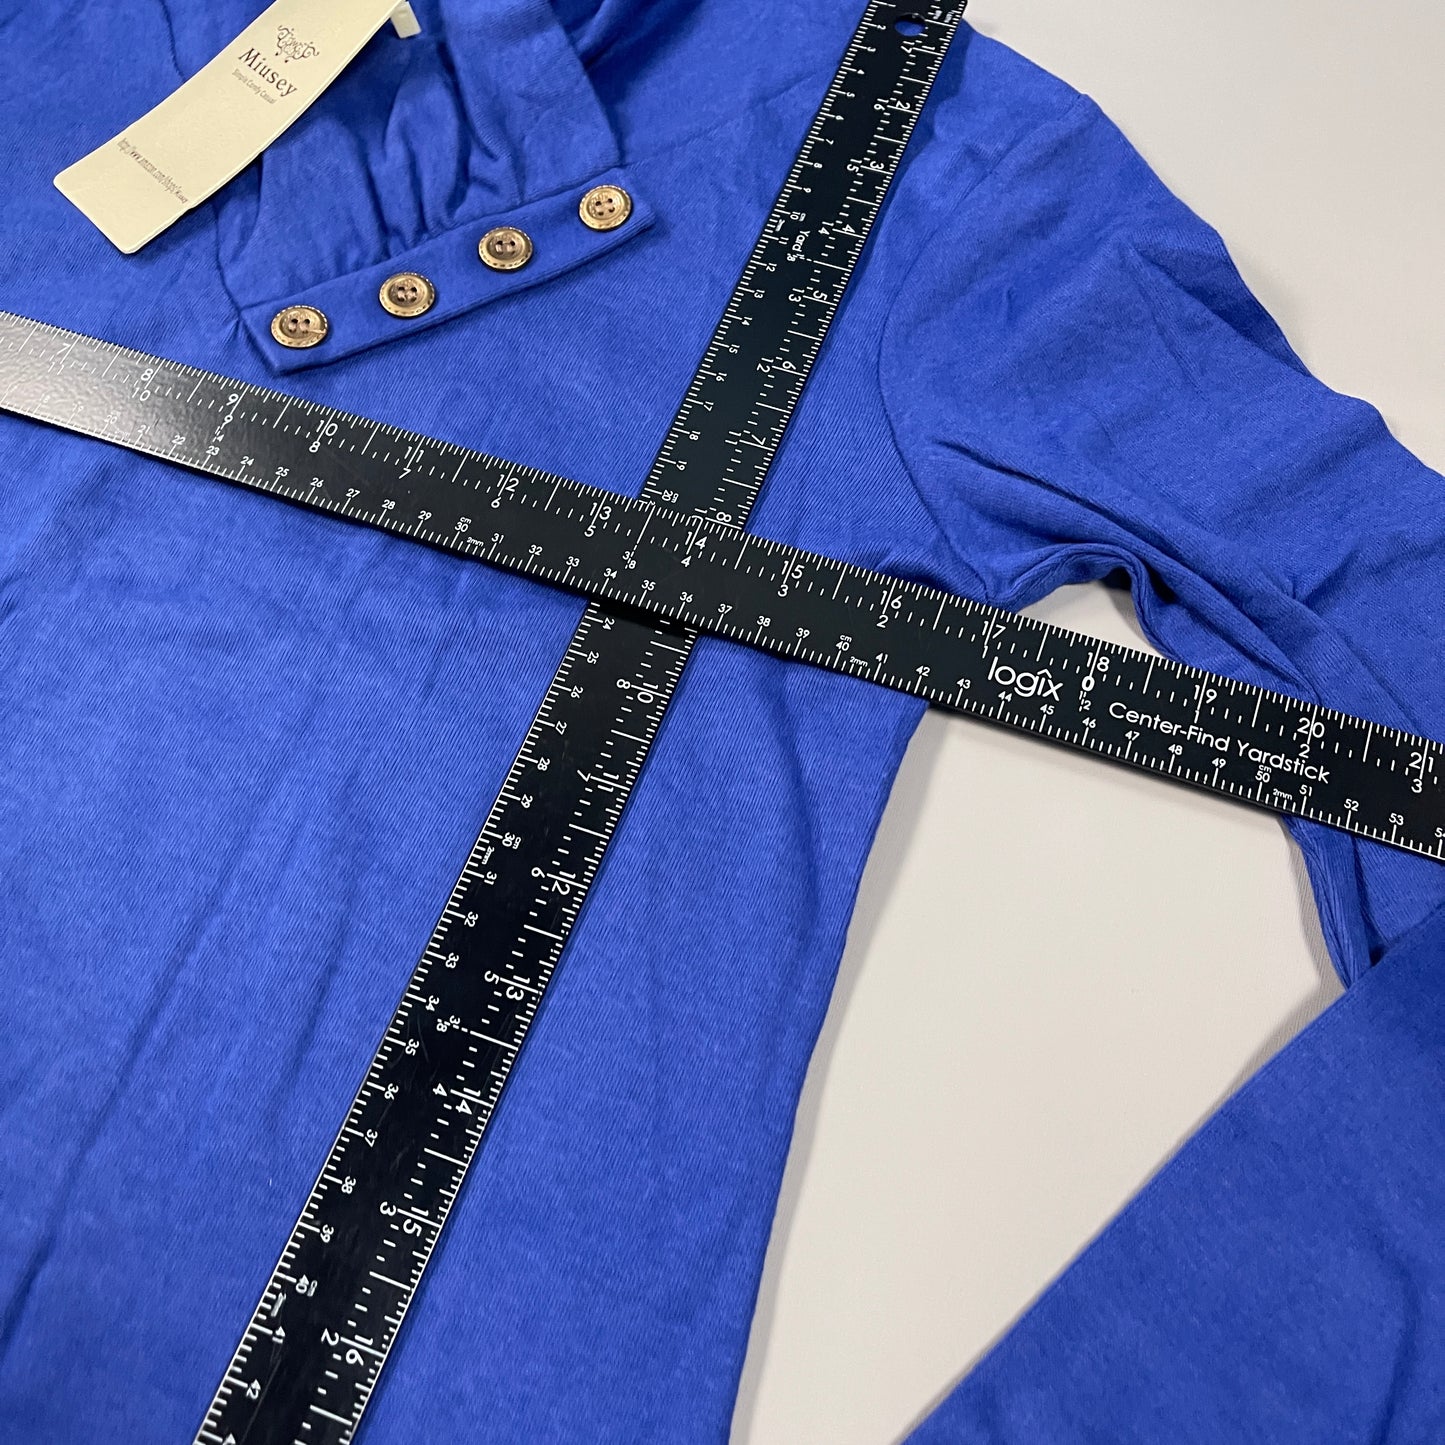 MIUSEY Long Sleeve Cowl Neck Tunic Top Blouse Women's Sz S Blue 20807 (New)